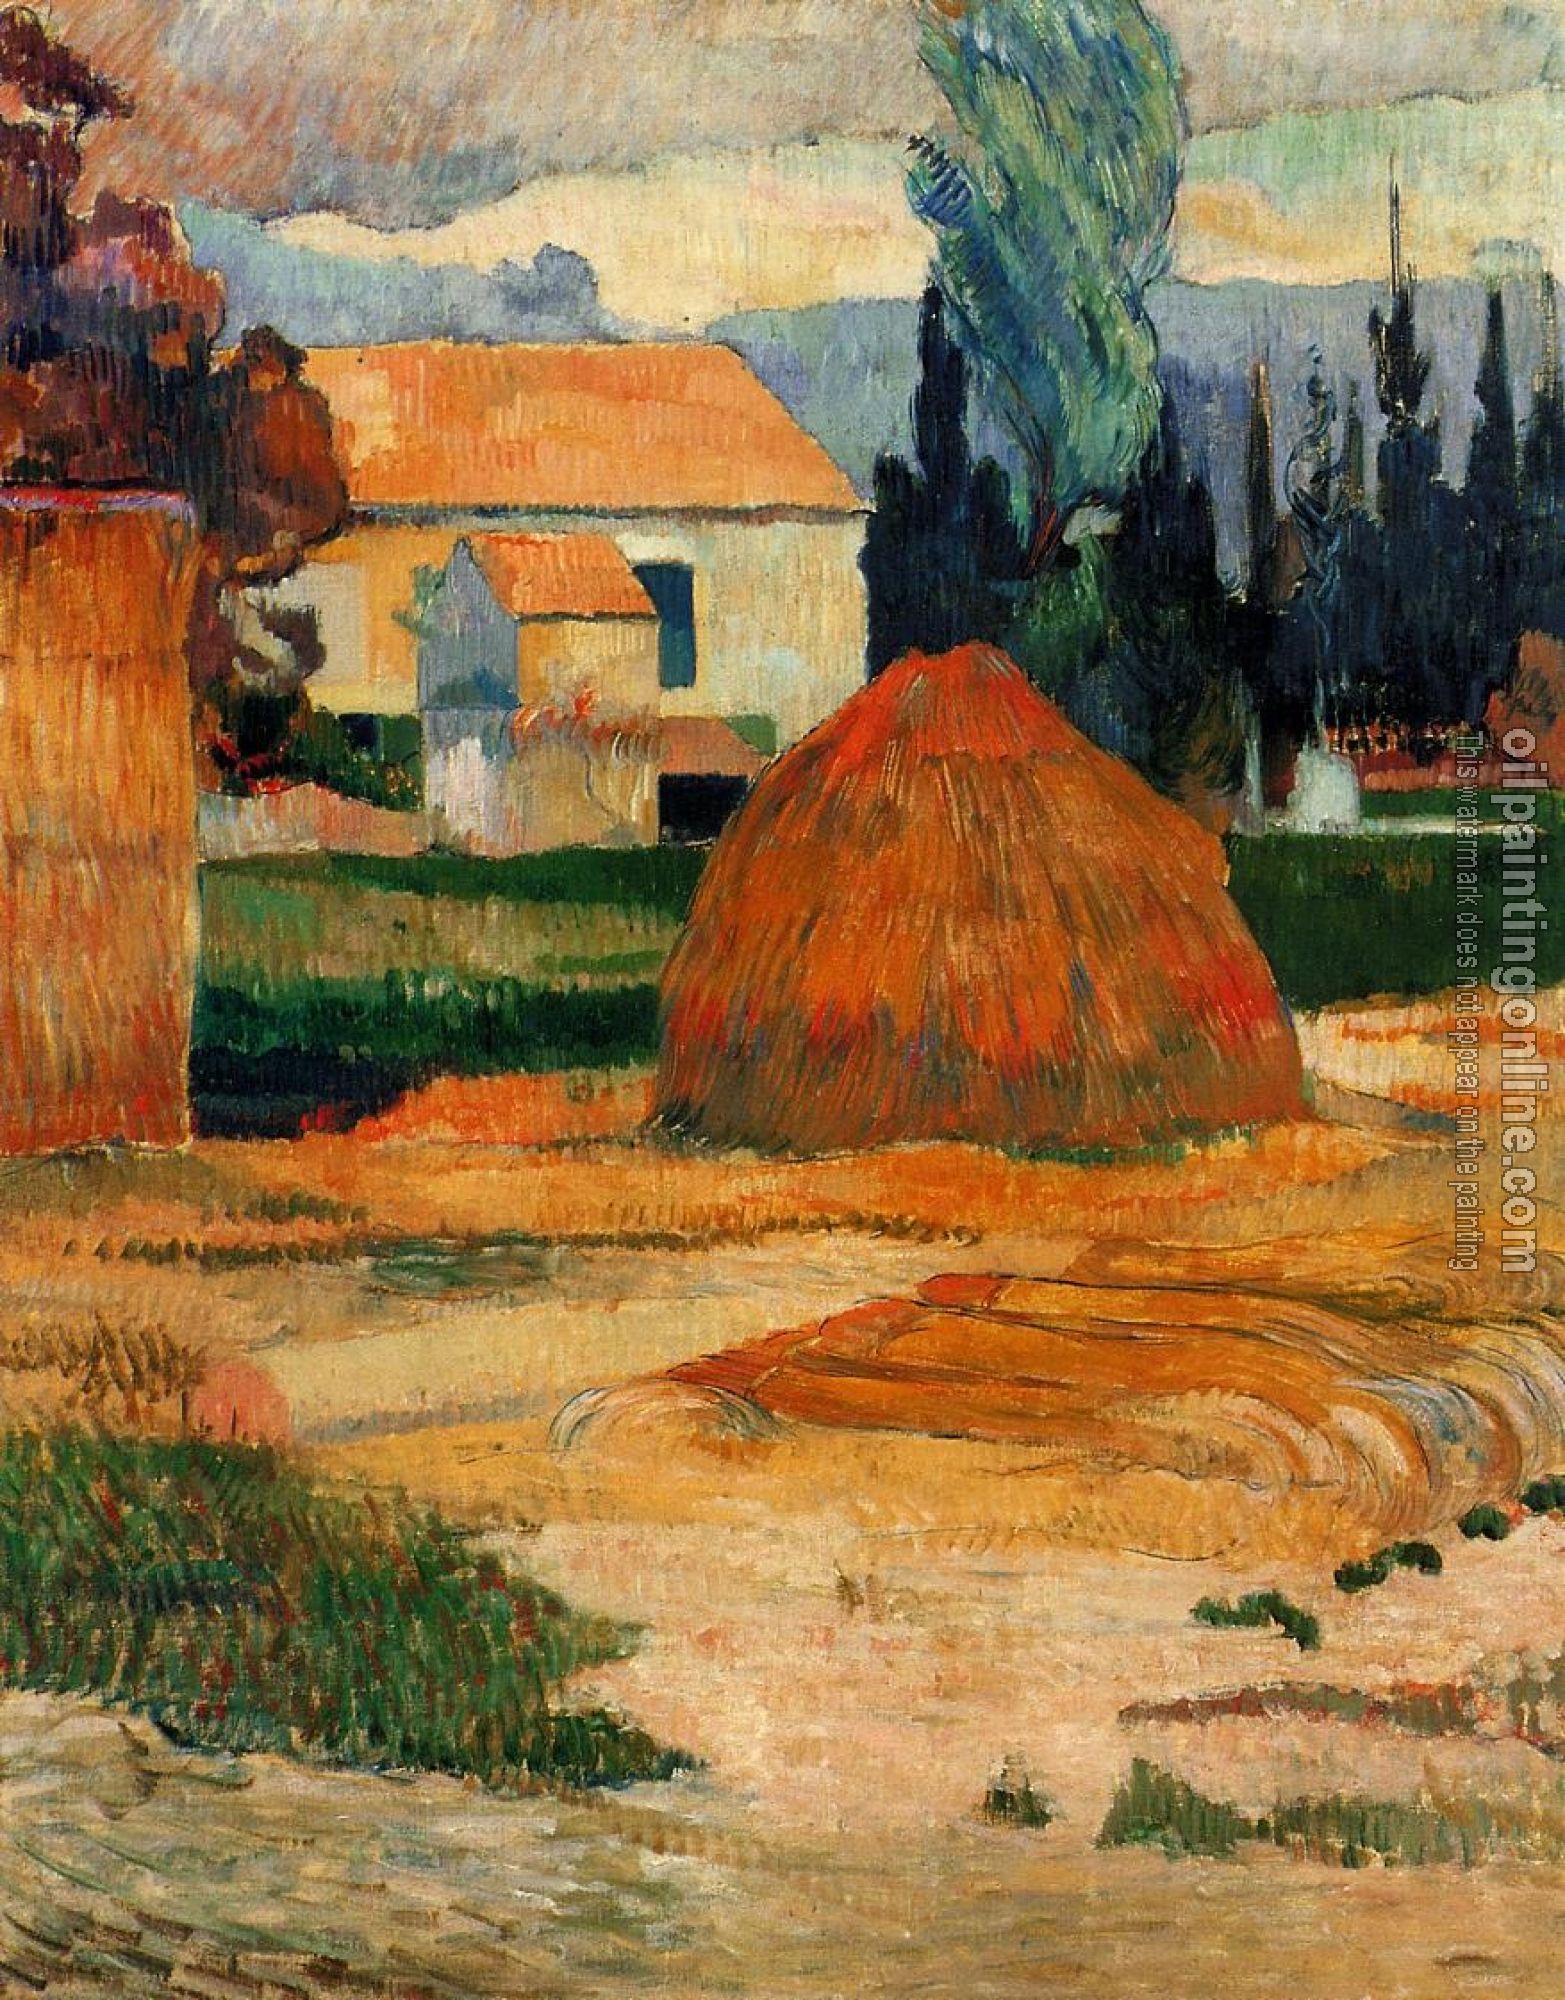 Gauguin, Paul - Haystack, near Arles